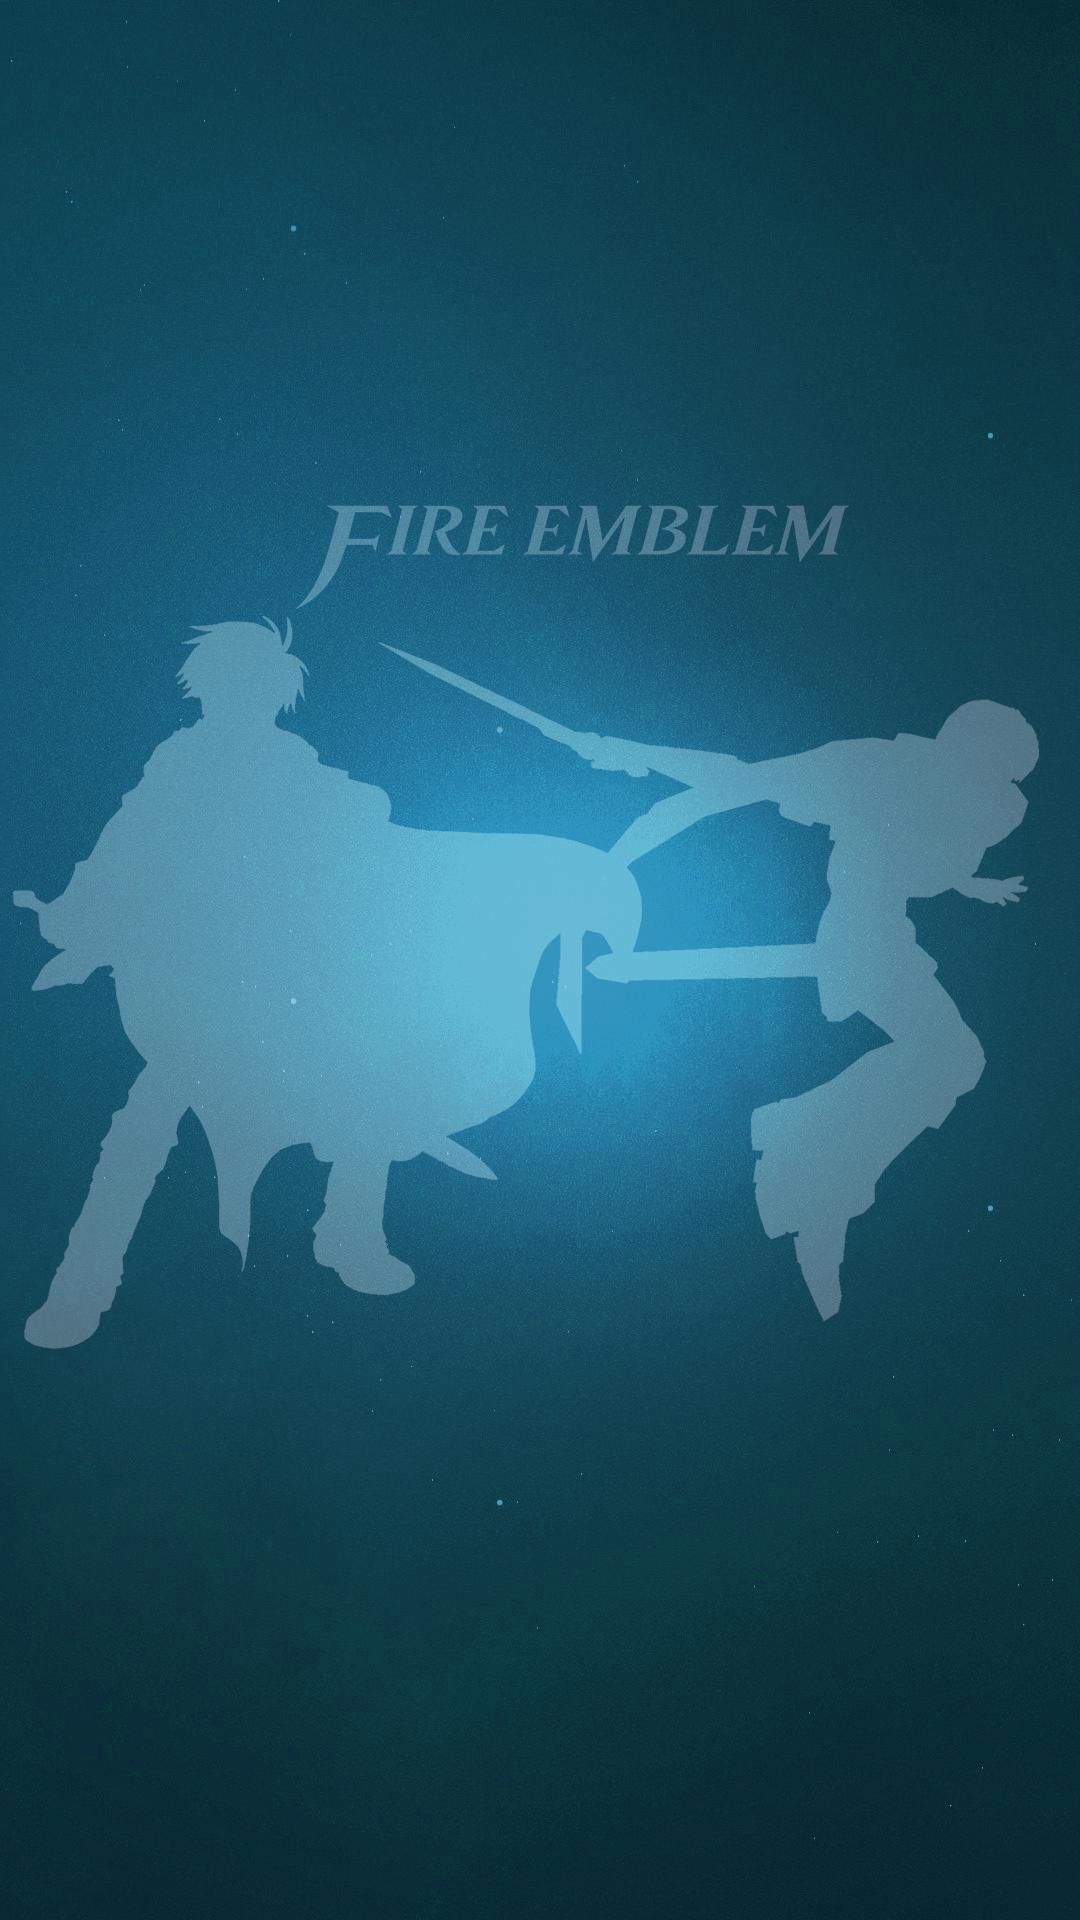 Smash Logo Fire Wallpapers